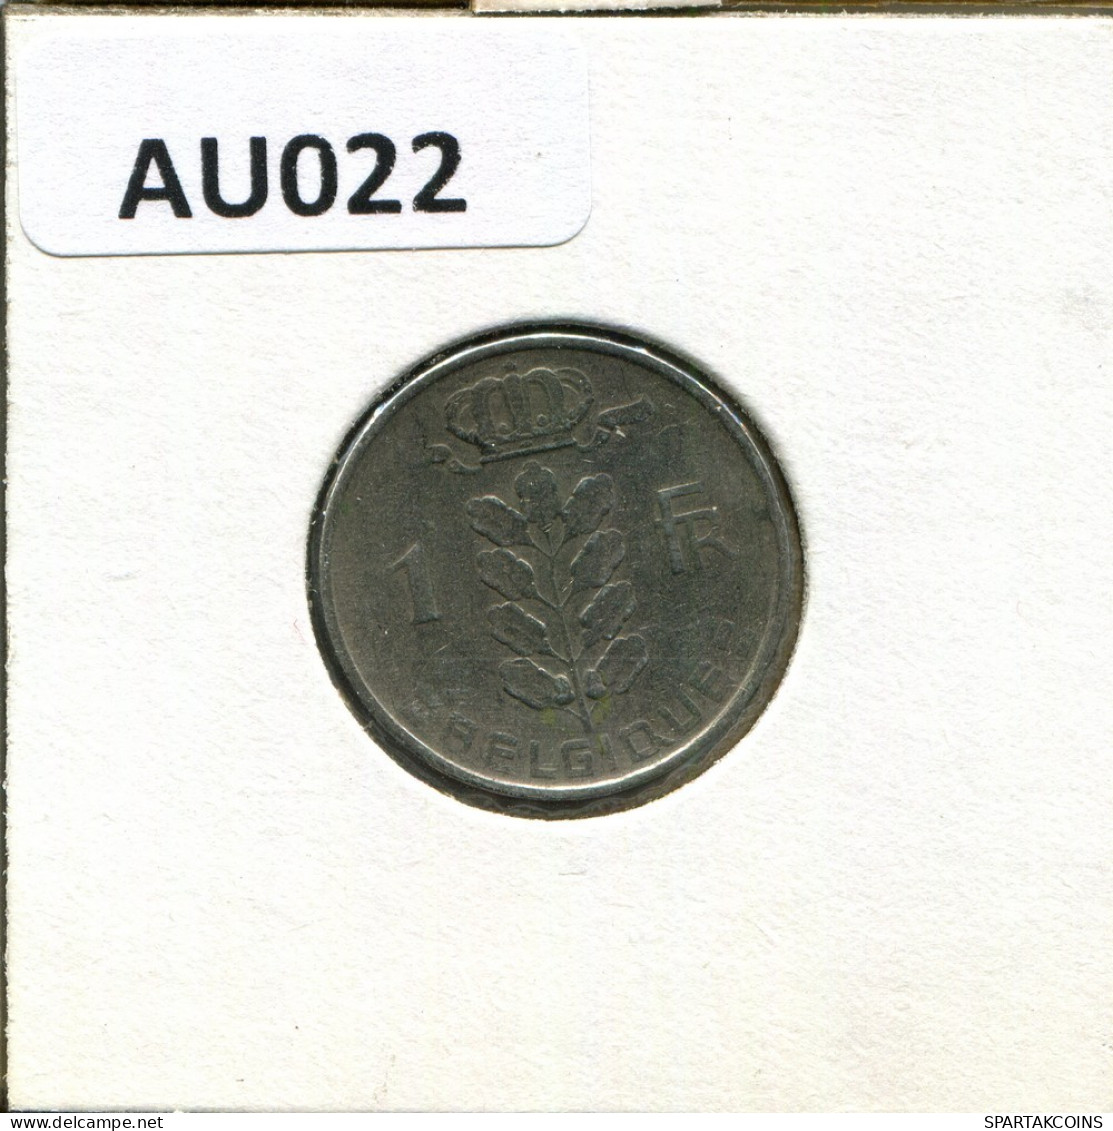 1 FRANC 1955 FRENCH Text BELGIUM Coin #AU022.U.A - 1 Franc